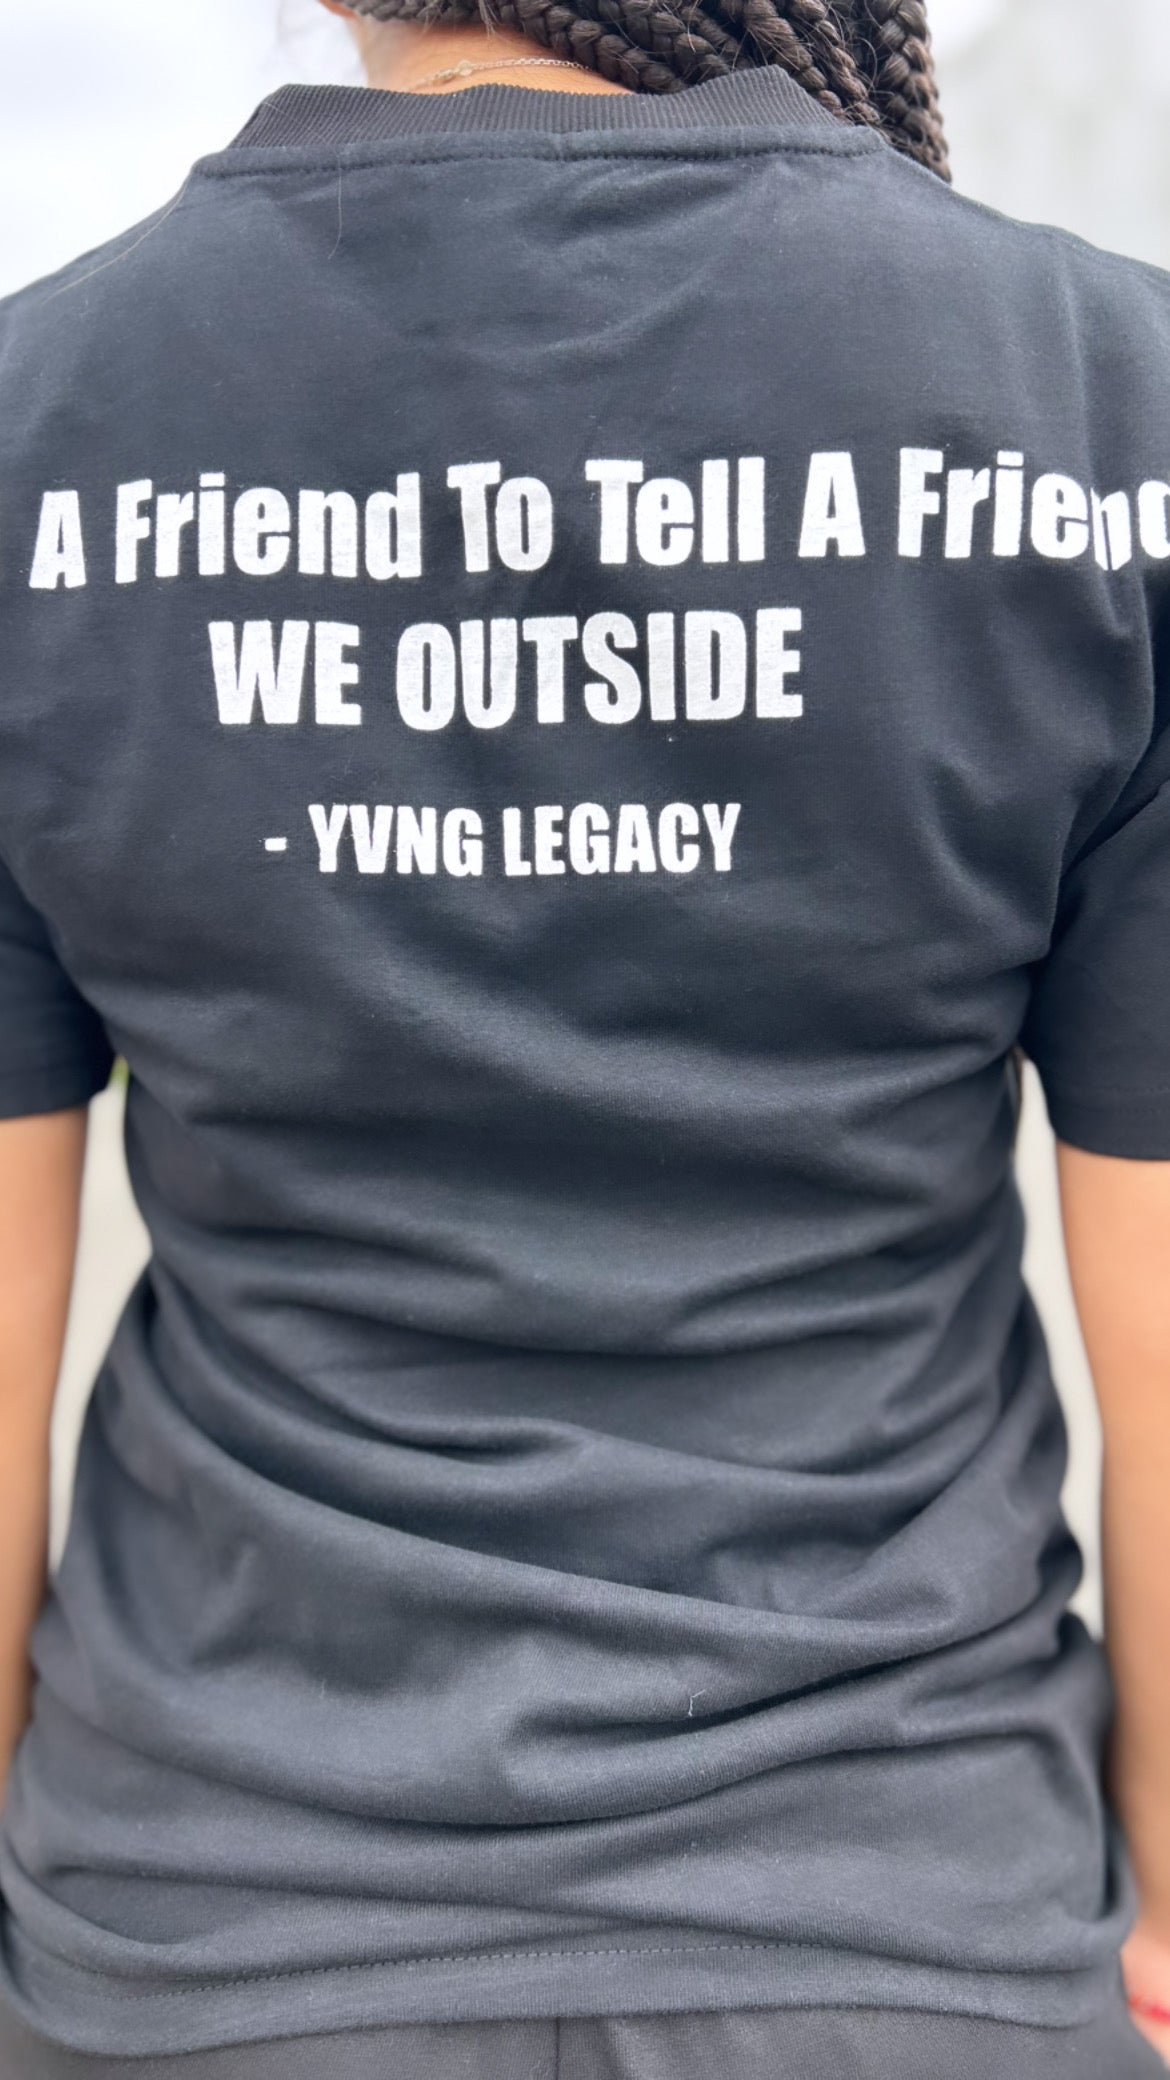 Yvng Legacy "DARLING" T-Shirt & Shorts